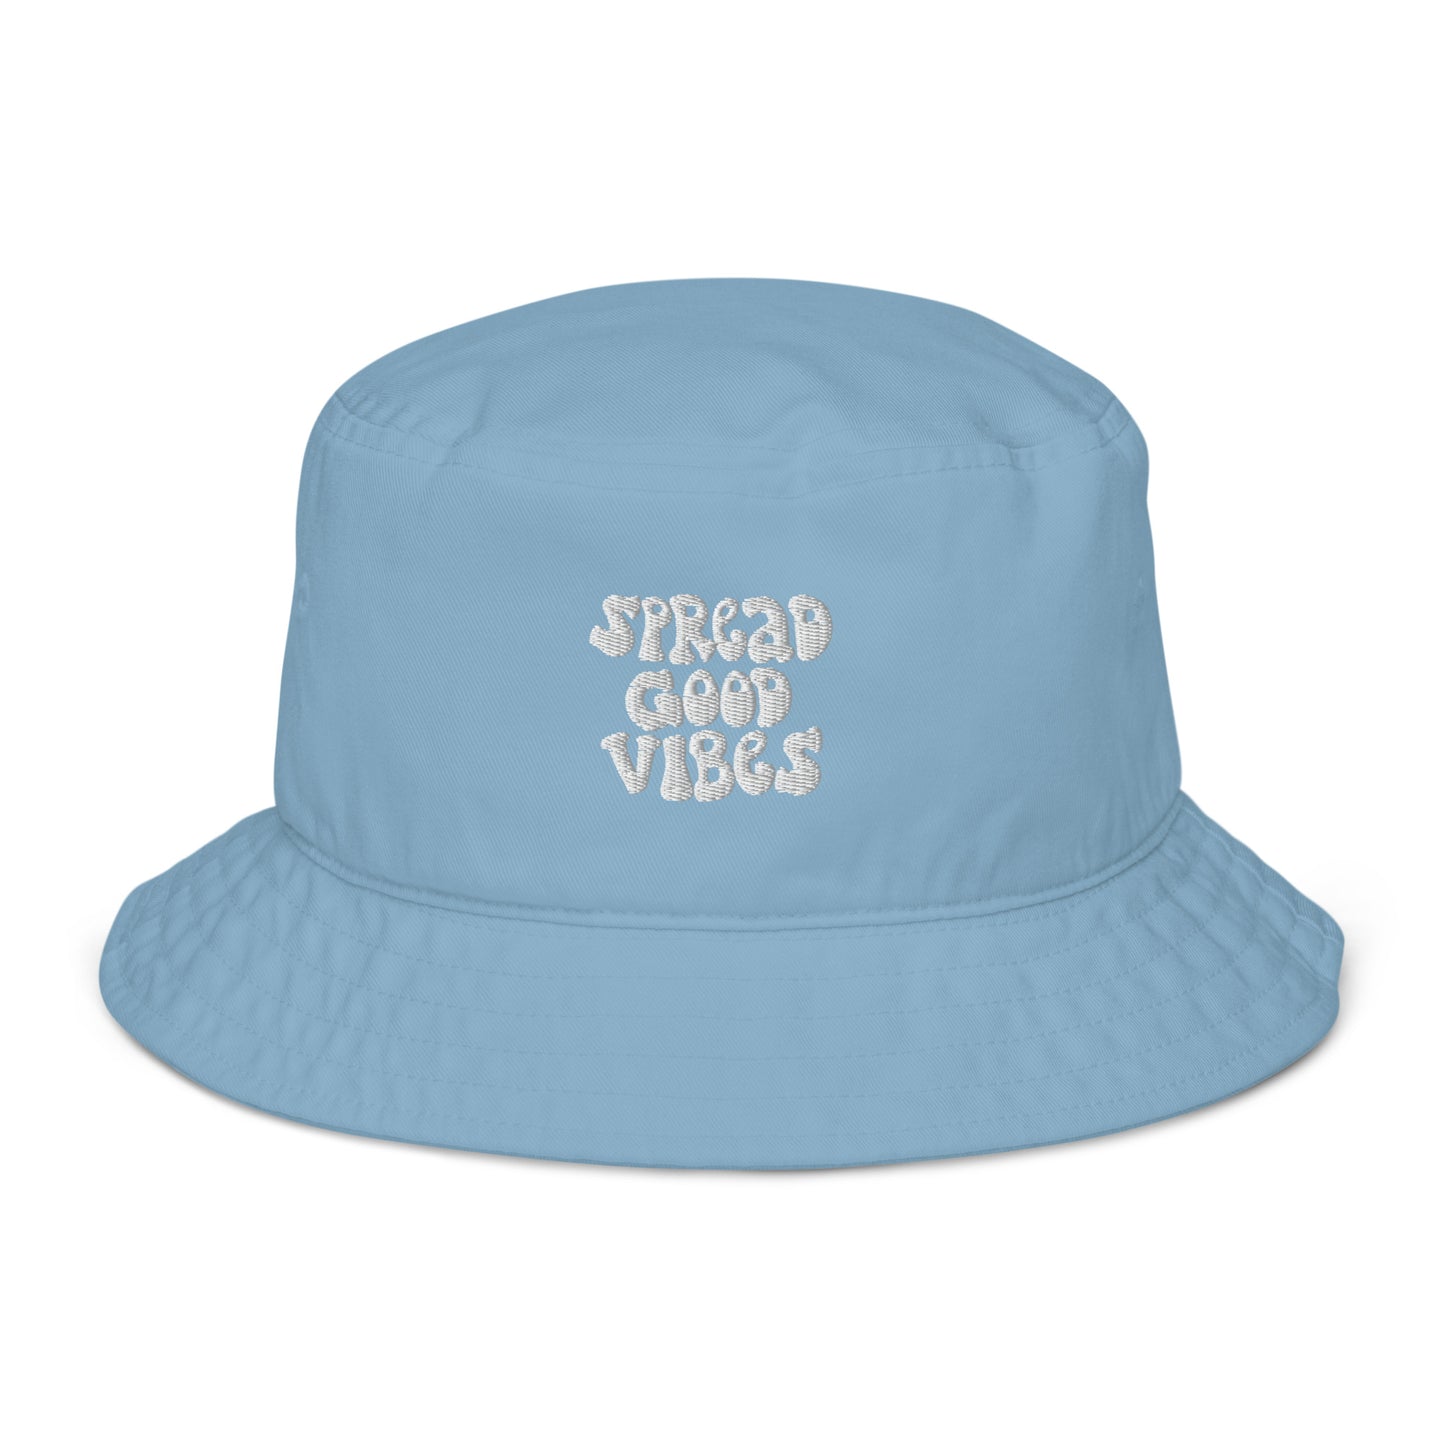 spread good vibes organic cotton bucket hat